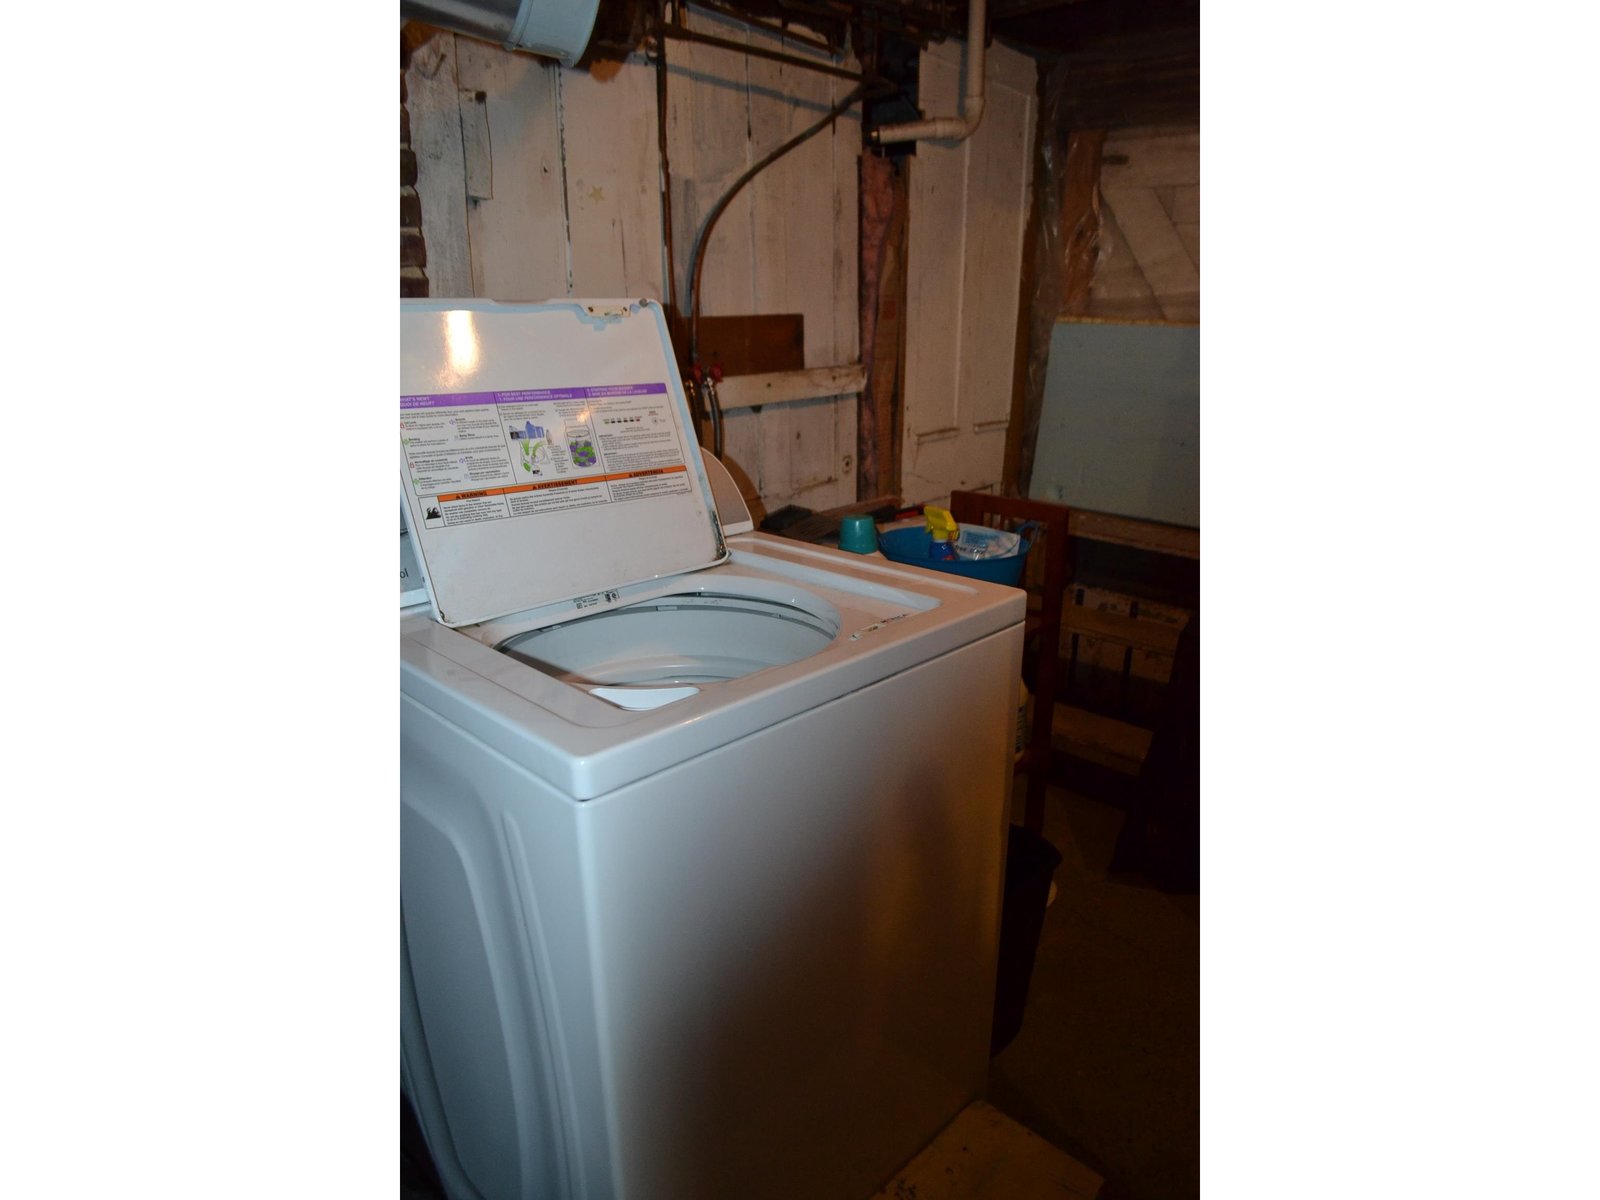 Washer/dryer in basement